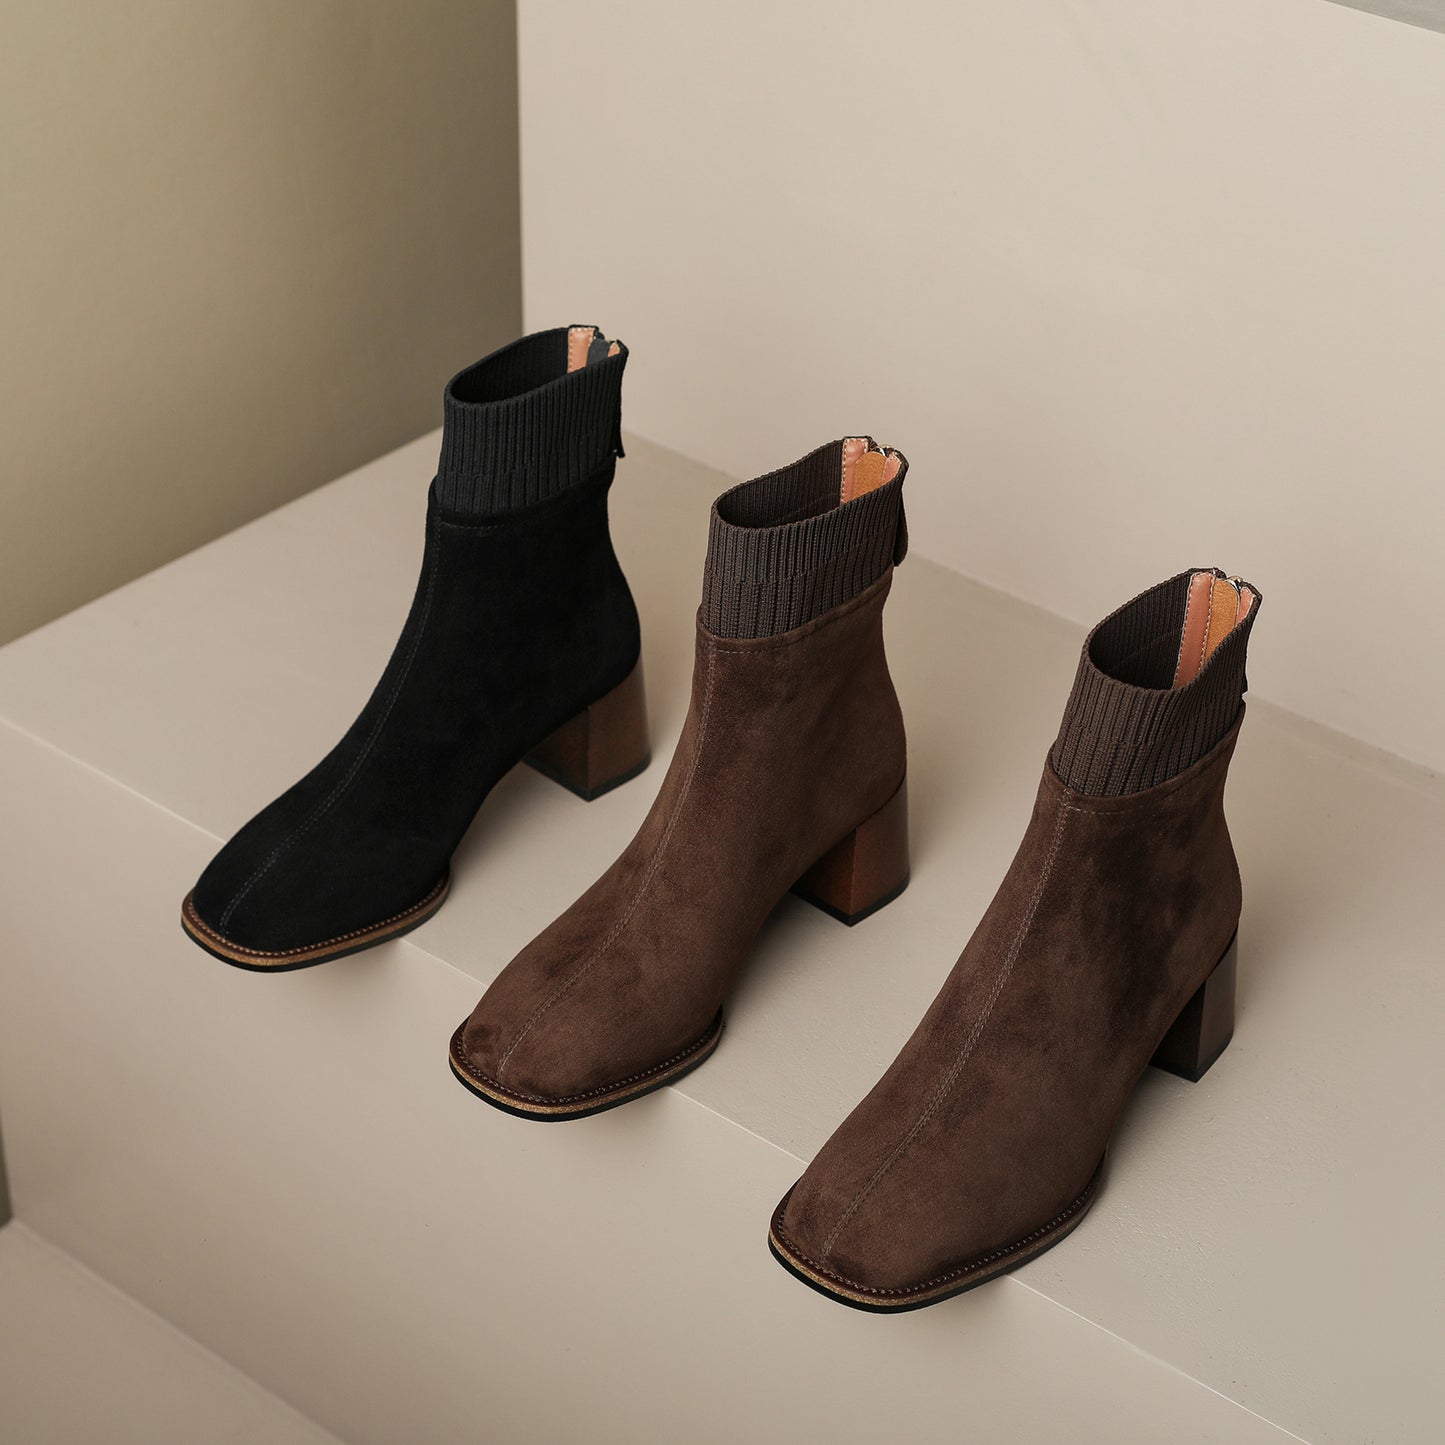 TinaCus Women's Handmade Suede Leather Block Heel Back Zip Up Ankle Boots